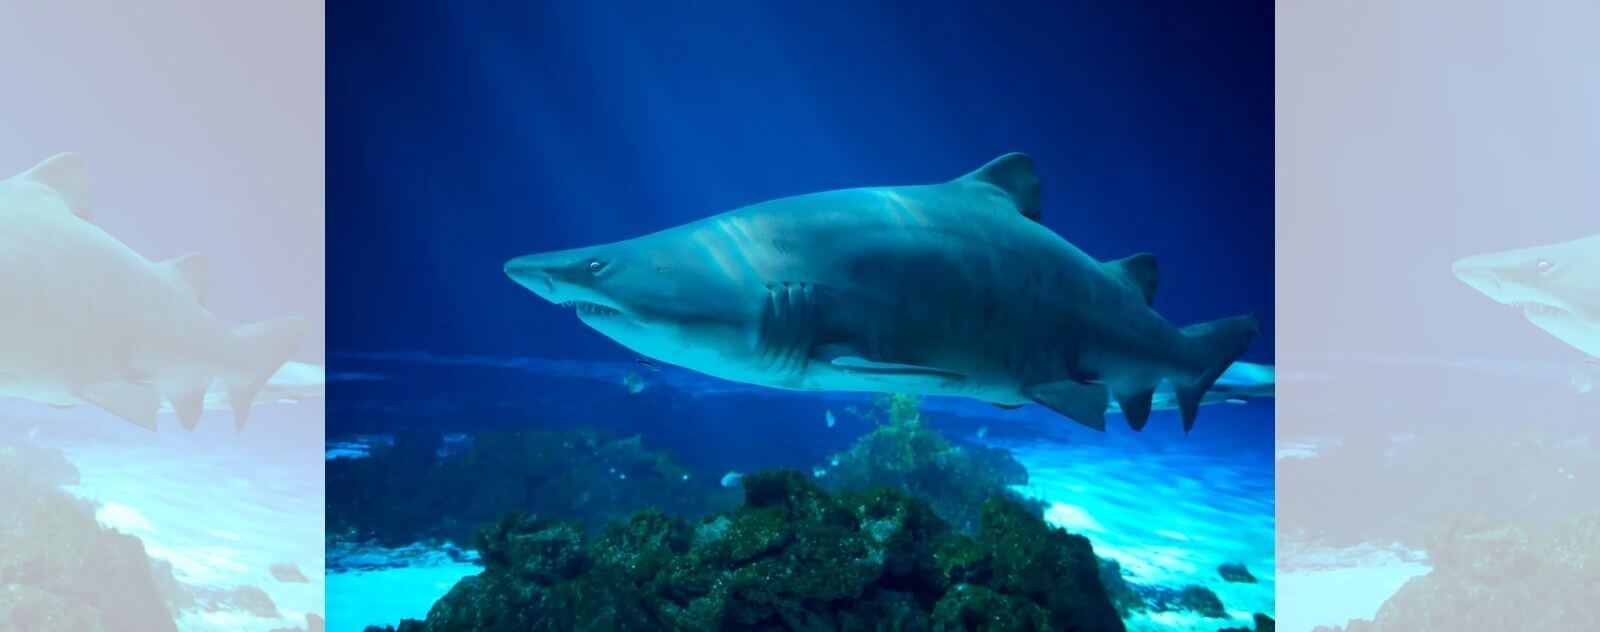 Requin Tigre des Sables avec un Corps Massif et des Grandes Dents